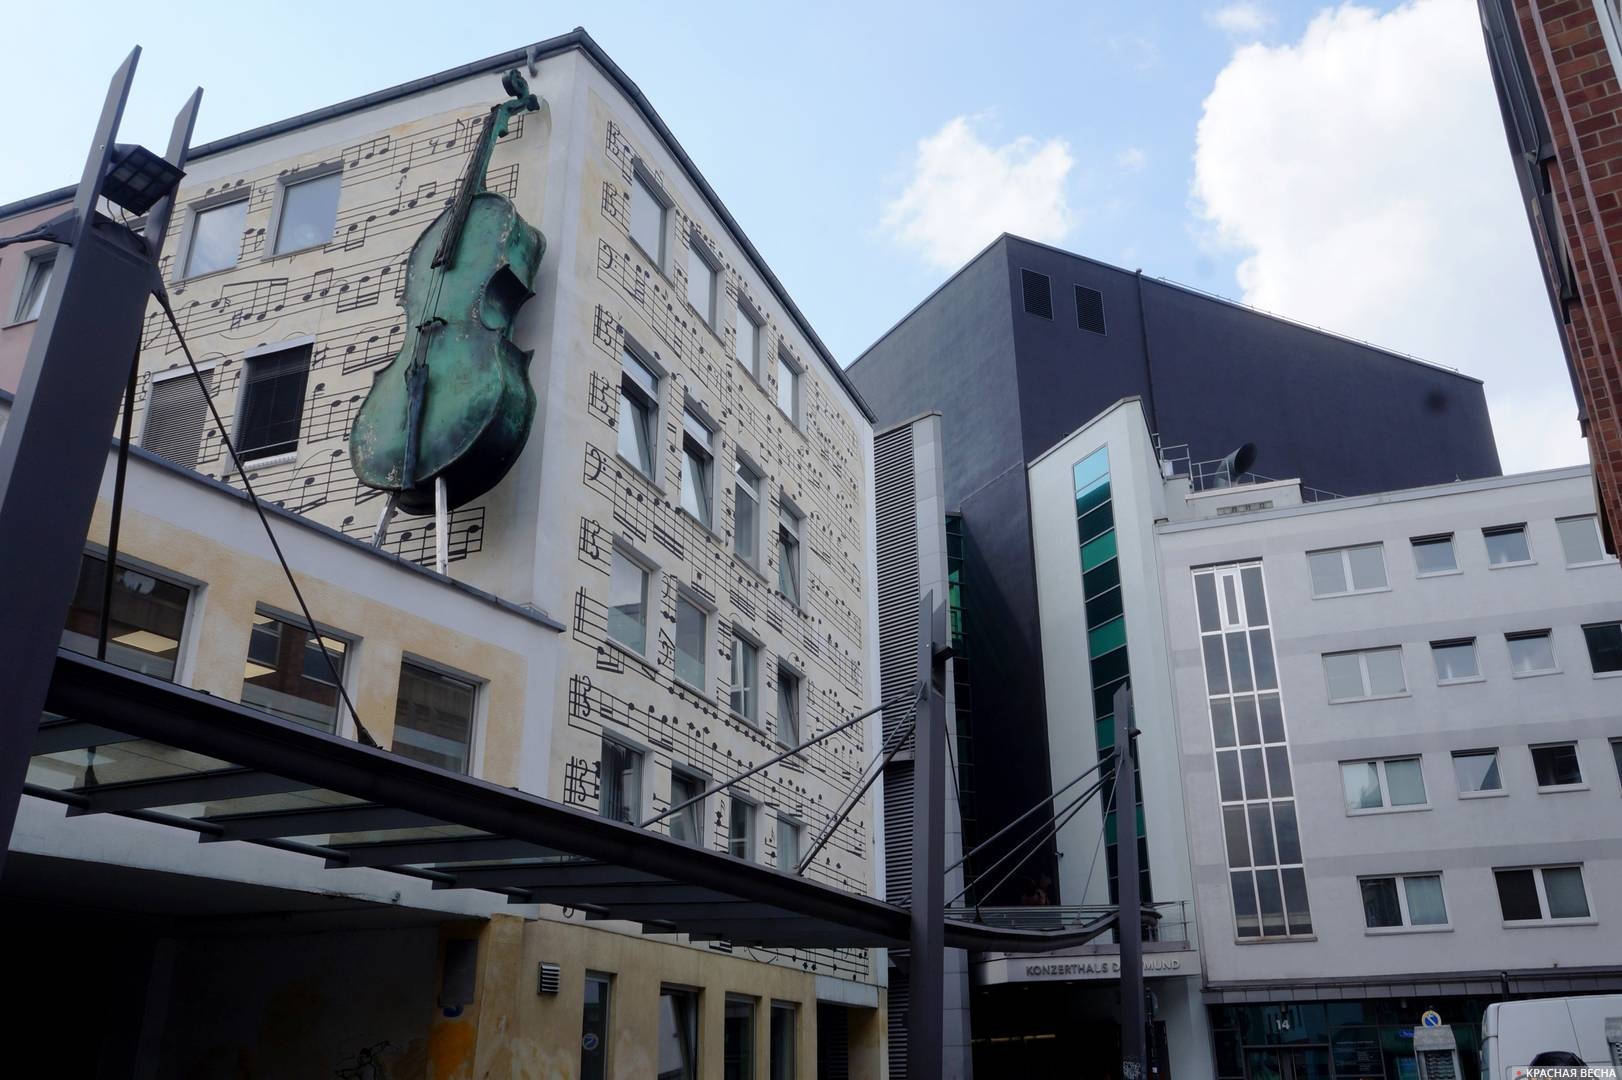 Дом со скрипкой Дортмунд. Германия